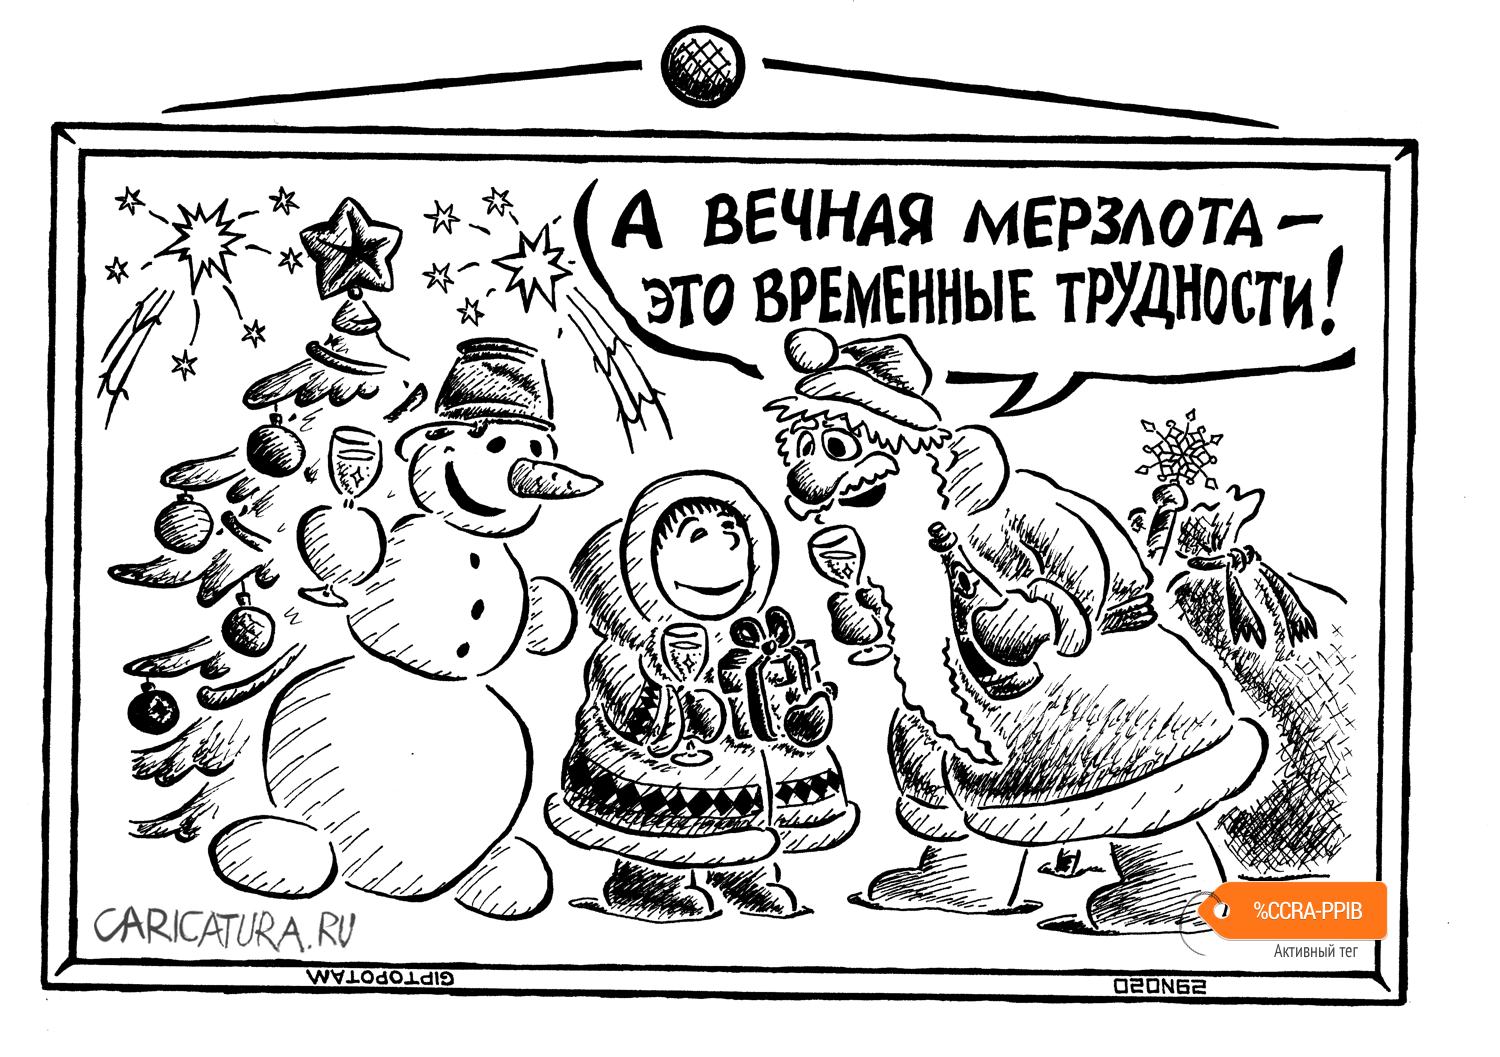 Карикатура "Свой среди чу...котских", Александр Евангелистов